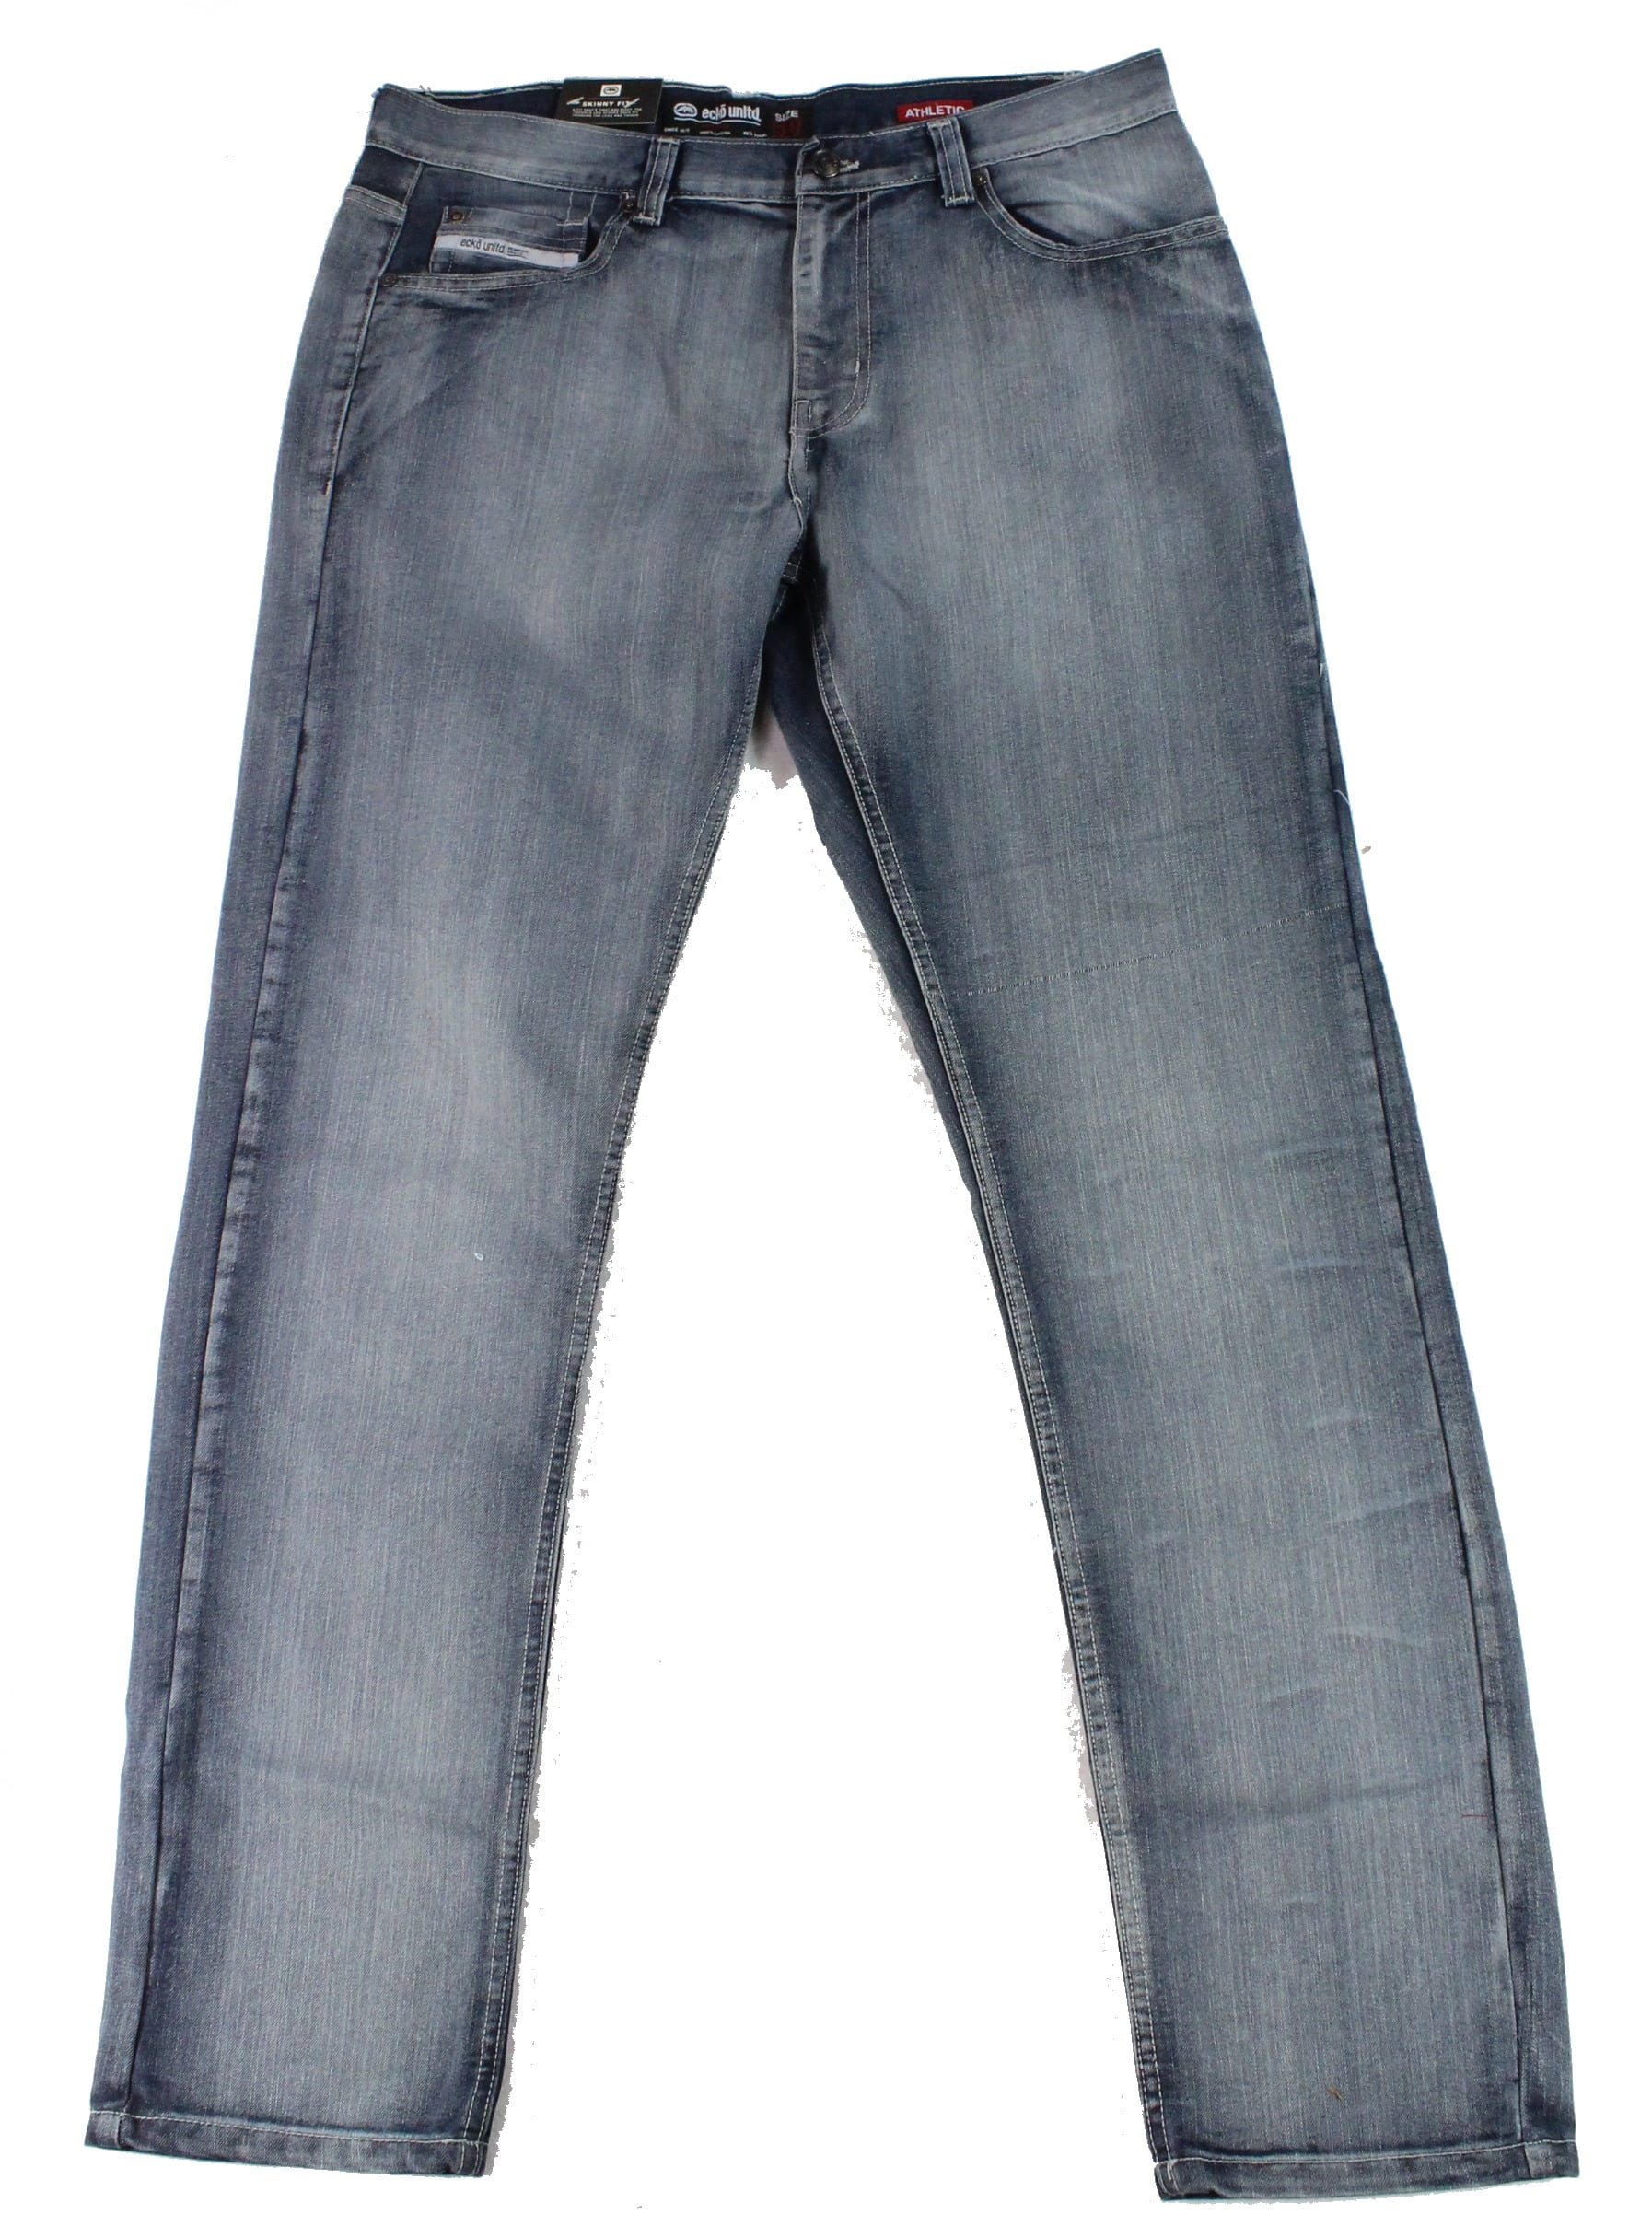 Ecko Unltd. Jeans - Mens Jeans 34X33 Athletic Skinny Back-Logo 34 ...